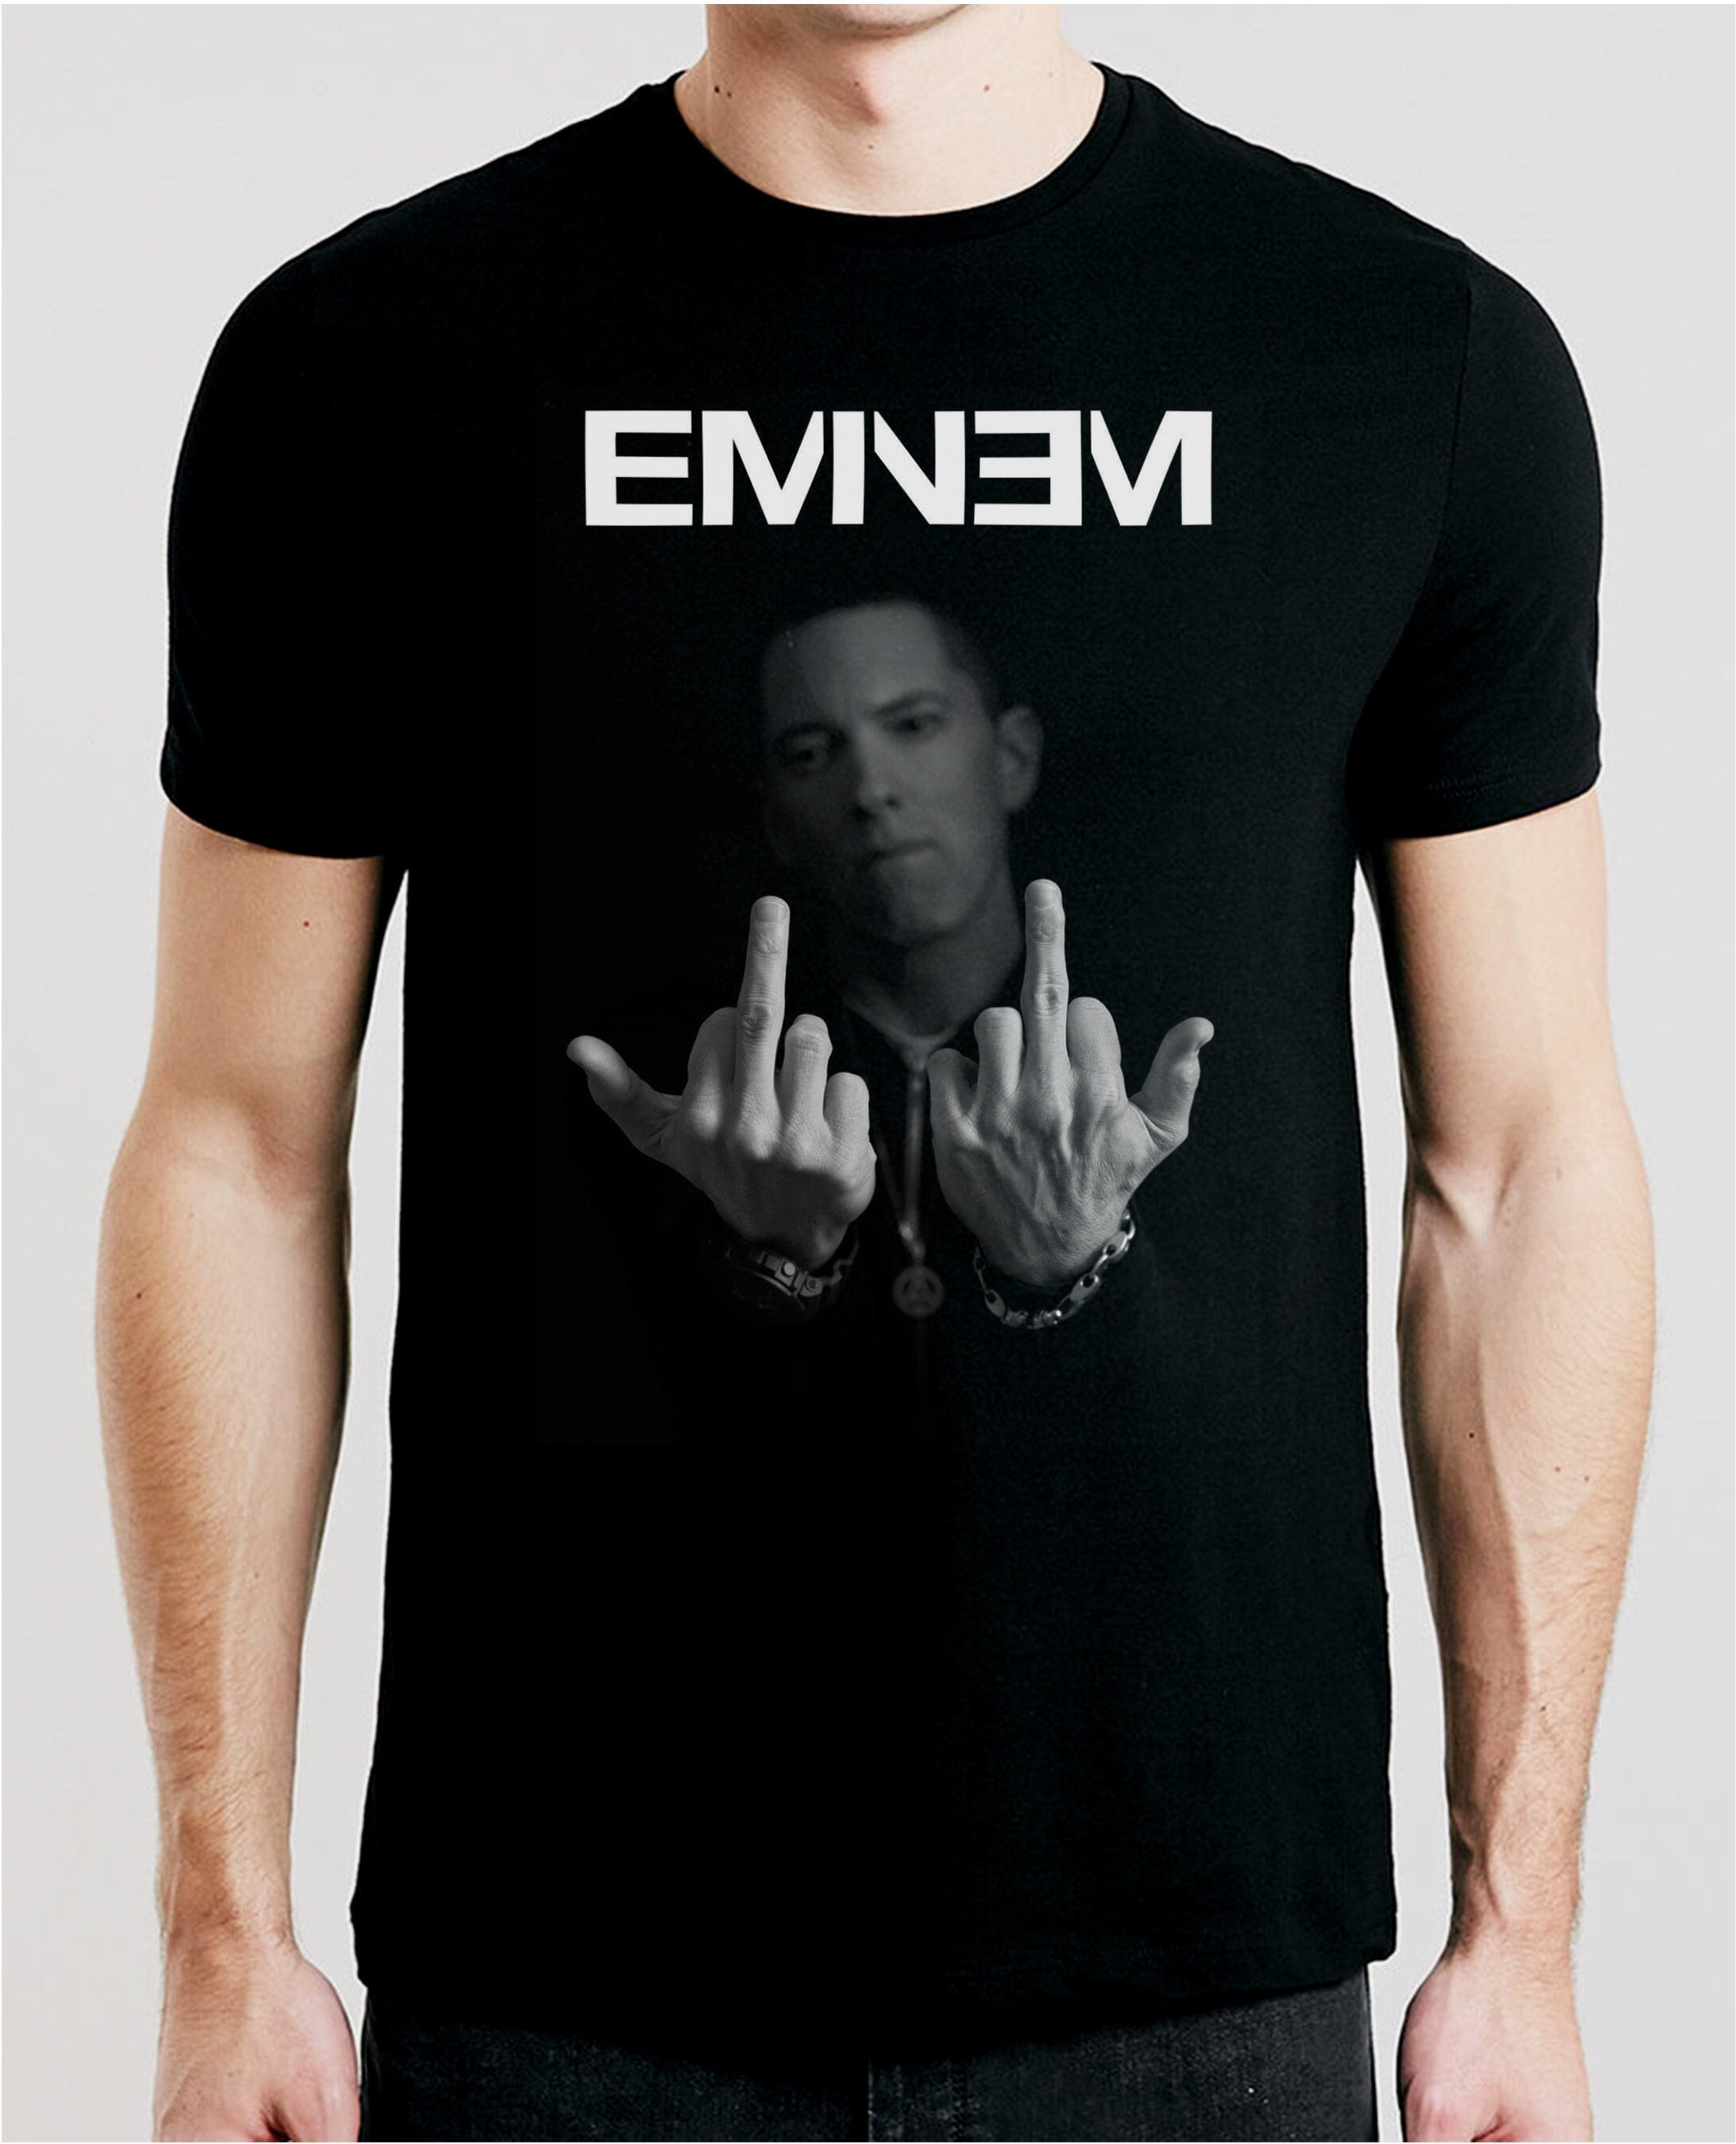 Discover EMINEM Fingers T Shirt Man Woman Kids Music Rapper Print